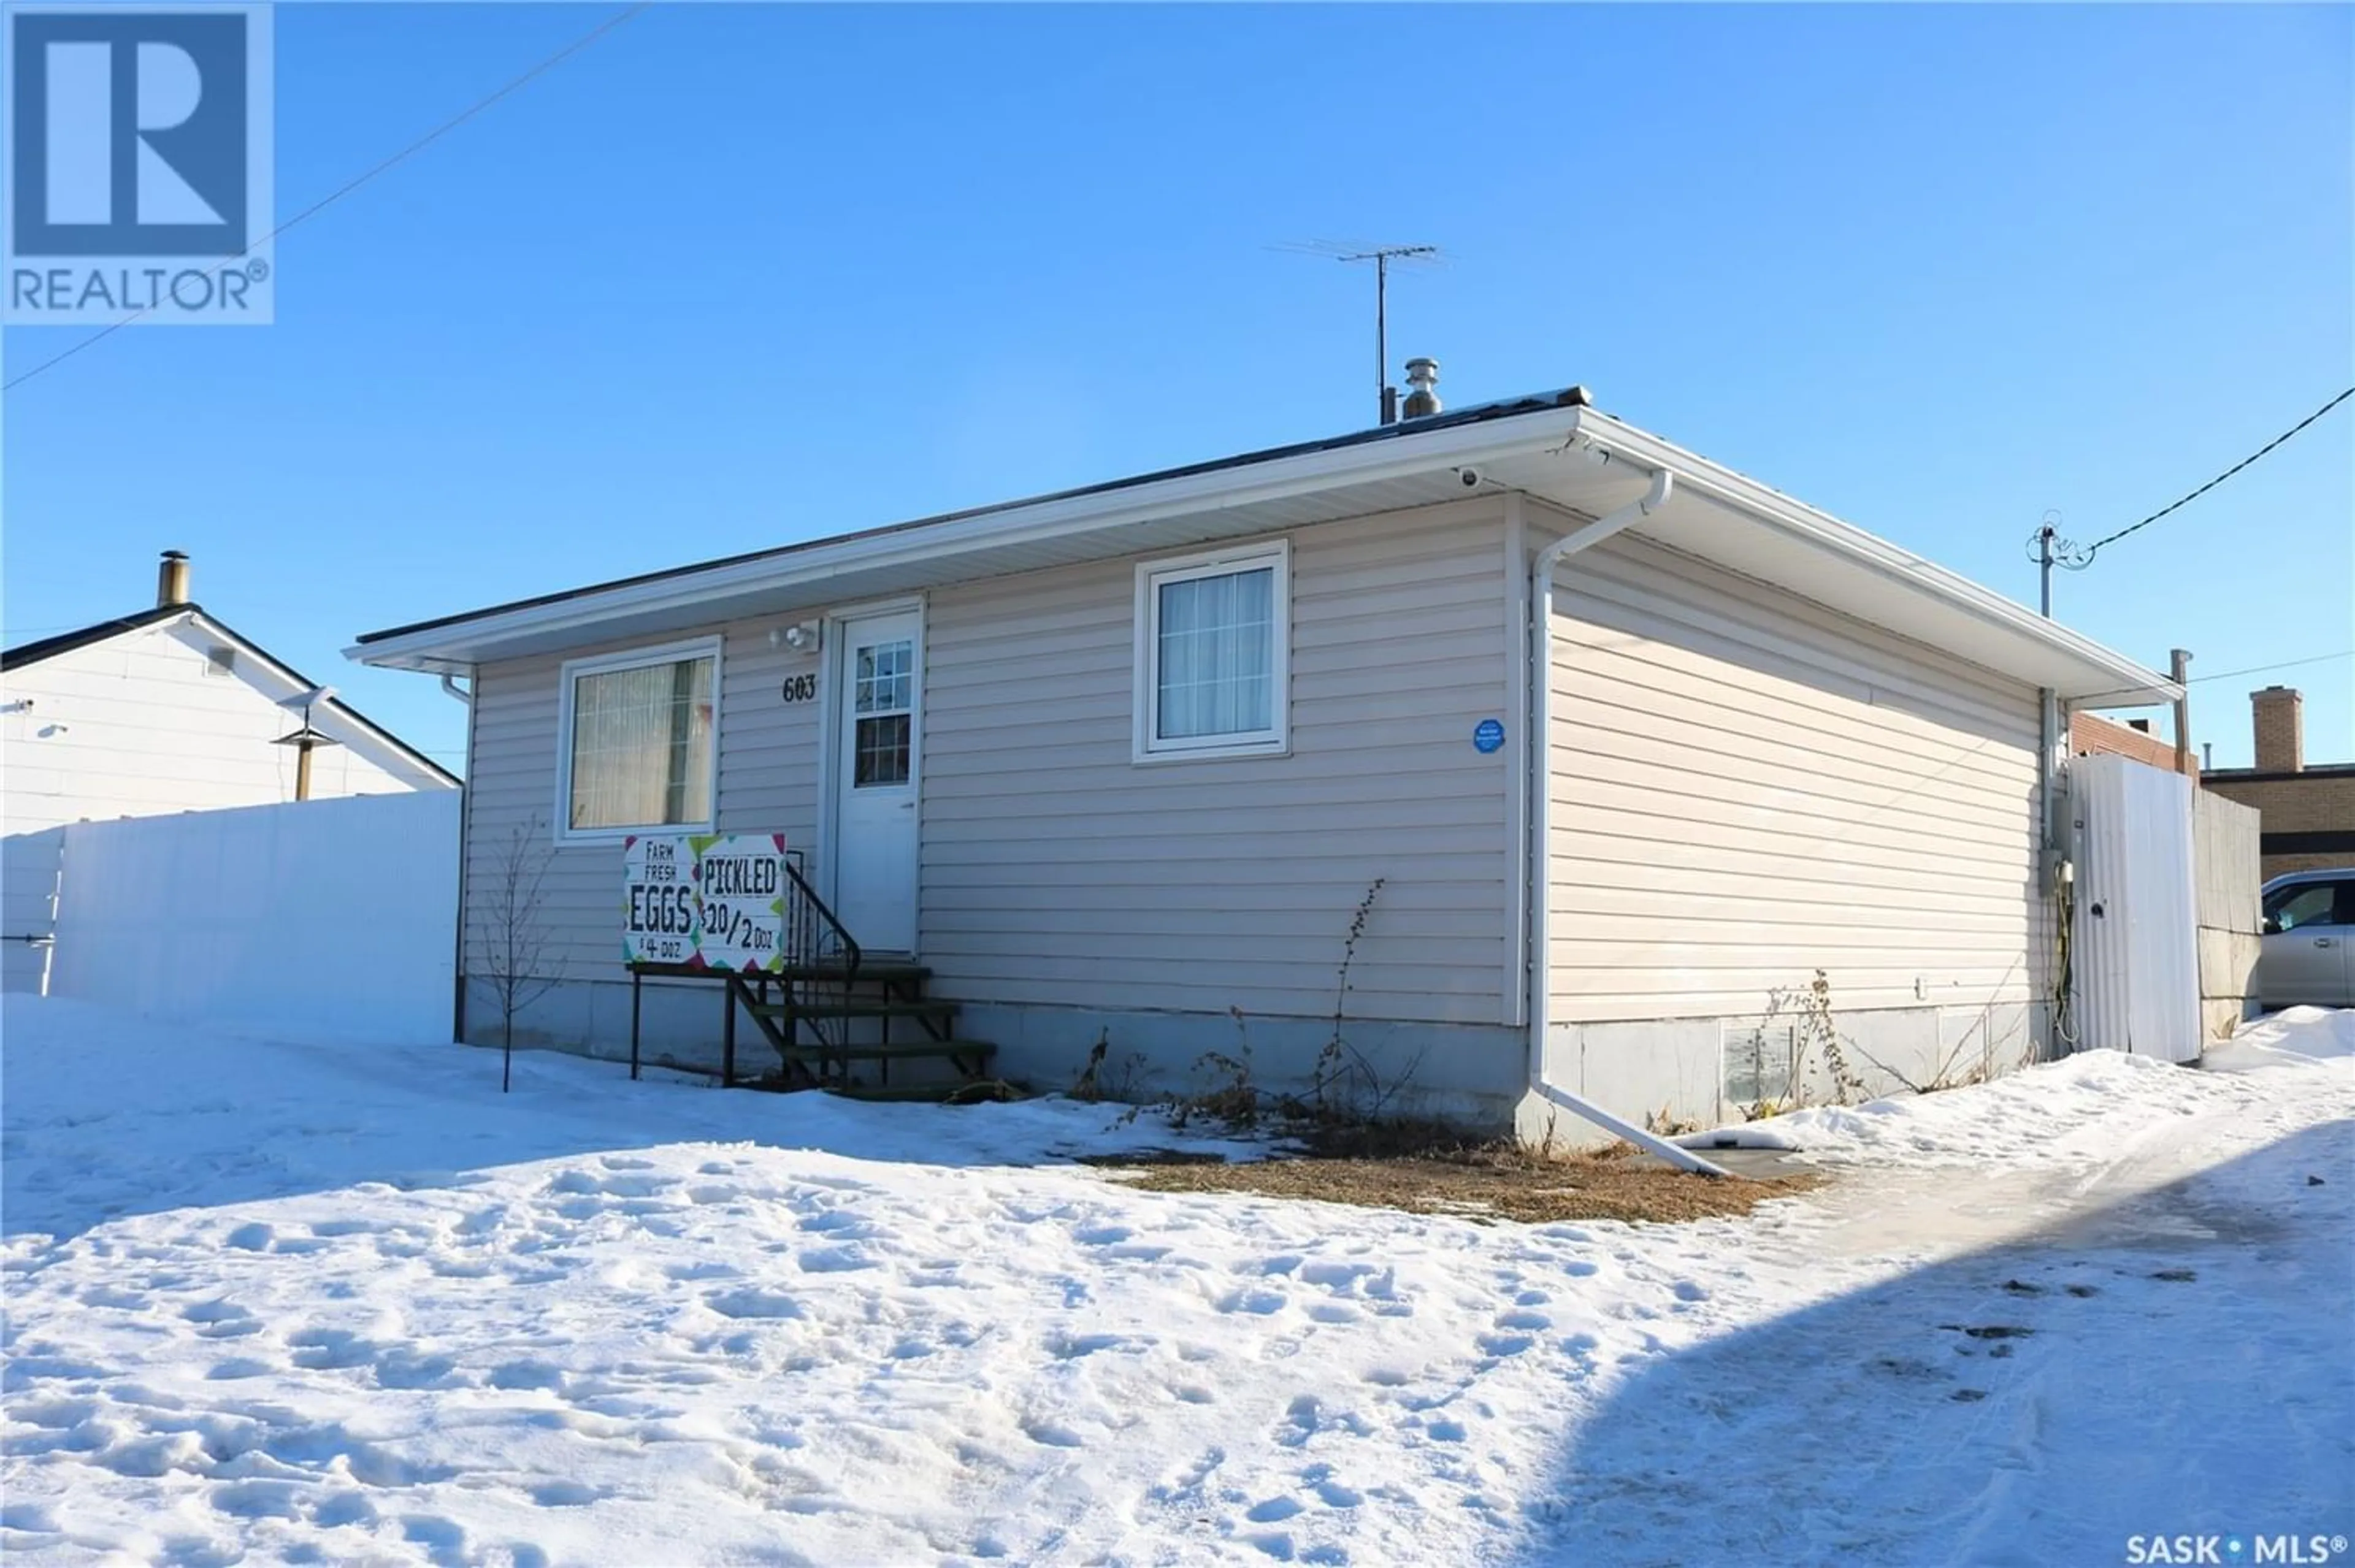 Home with unknown exterior material for 603 Gordon STREET, Moosomin Saskatchewan S0G3N0